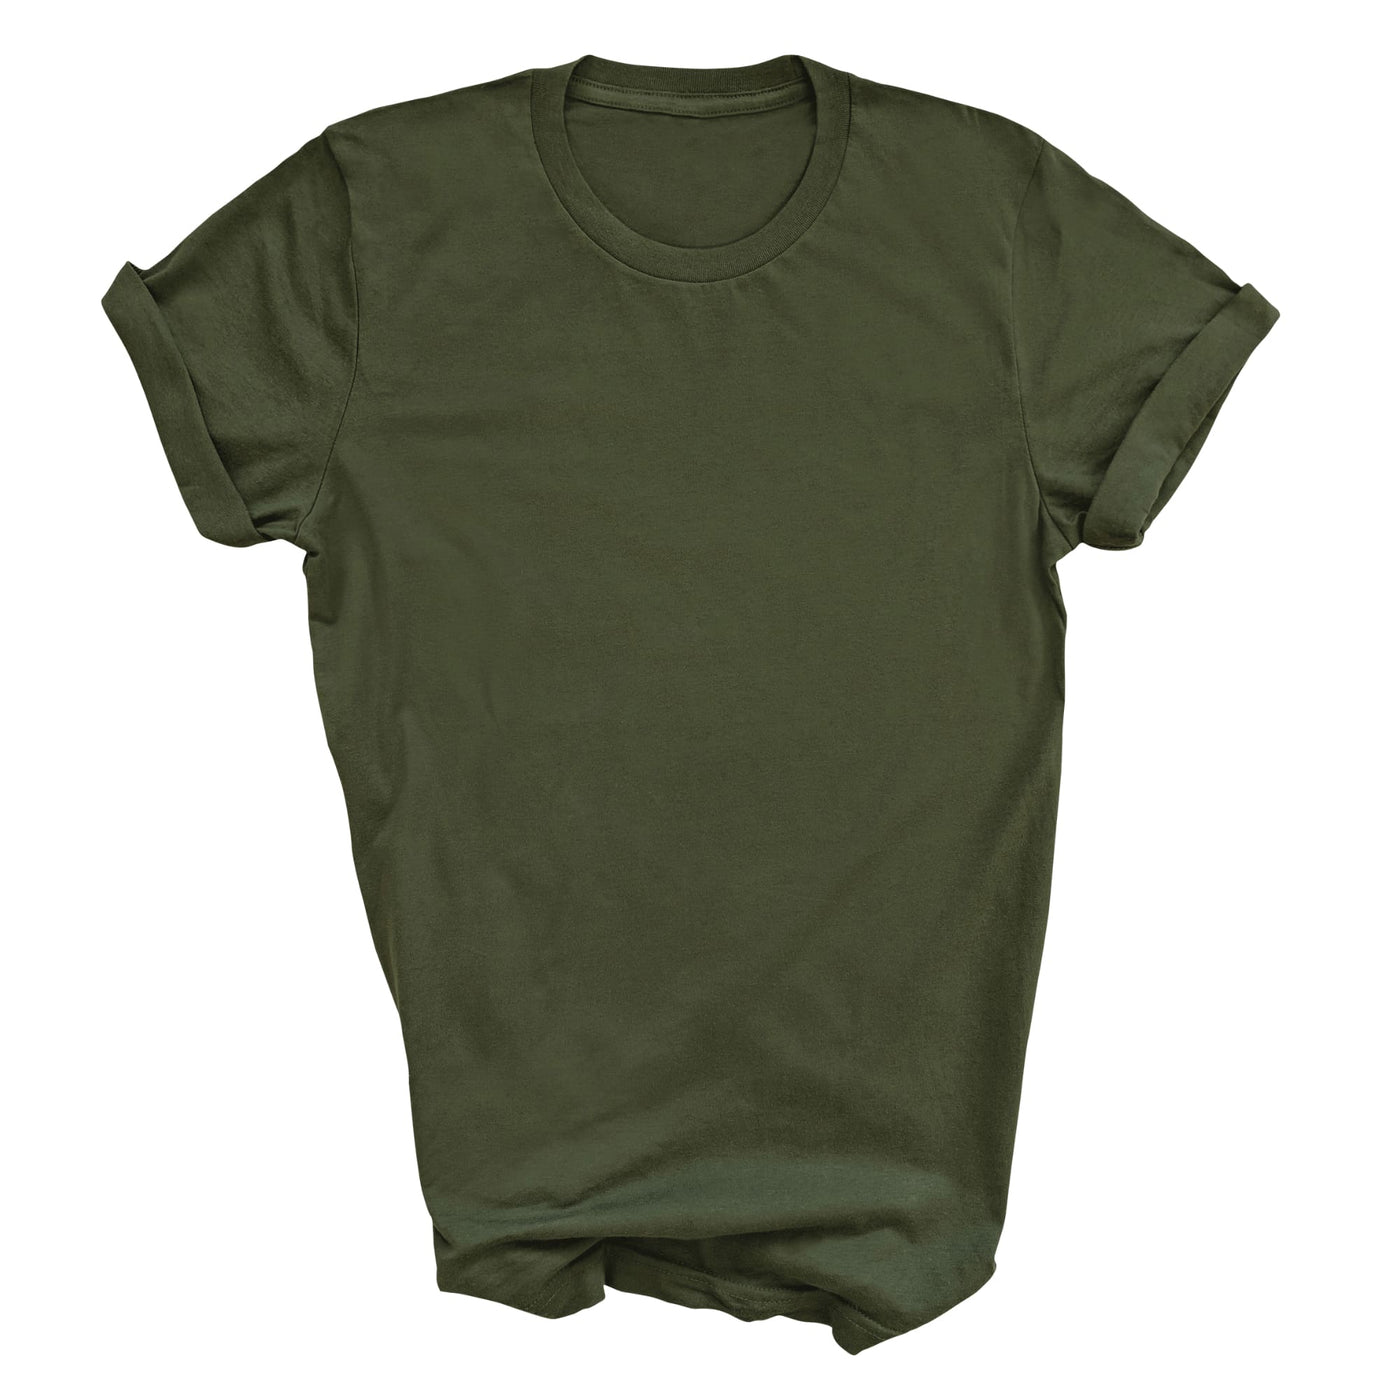 Unisex Custom Print Graphic T - shirt - Extra Long/wide Design | T - Shirts